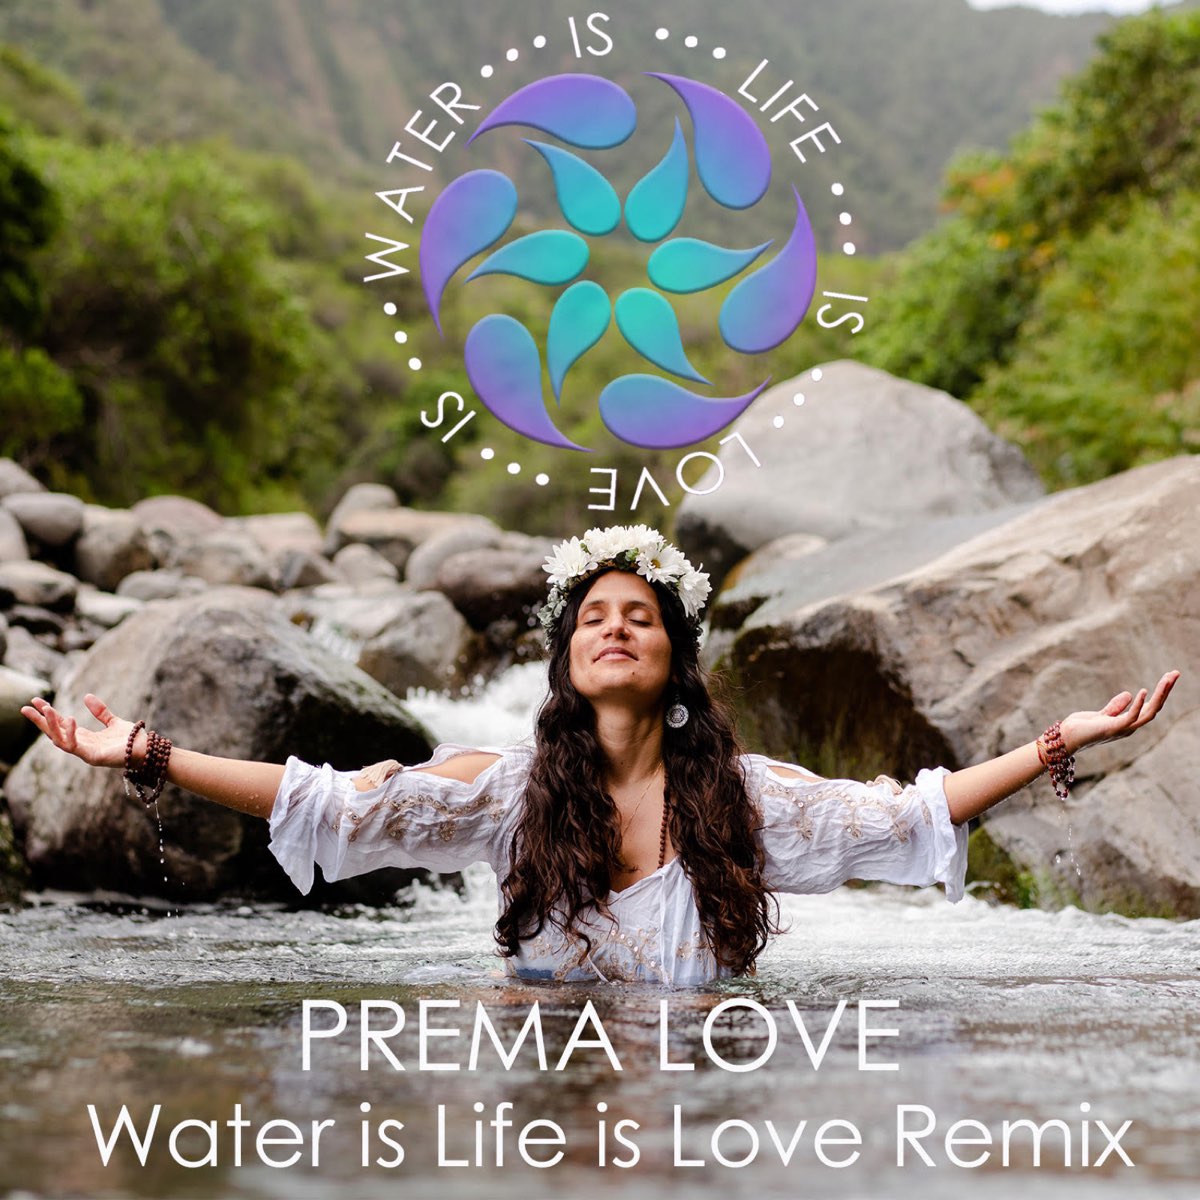 Lets love remix. Water Love песня. Према любовь. Water is Life. Satha watersoul.